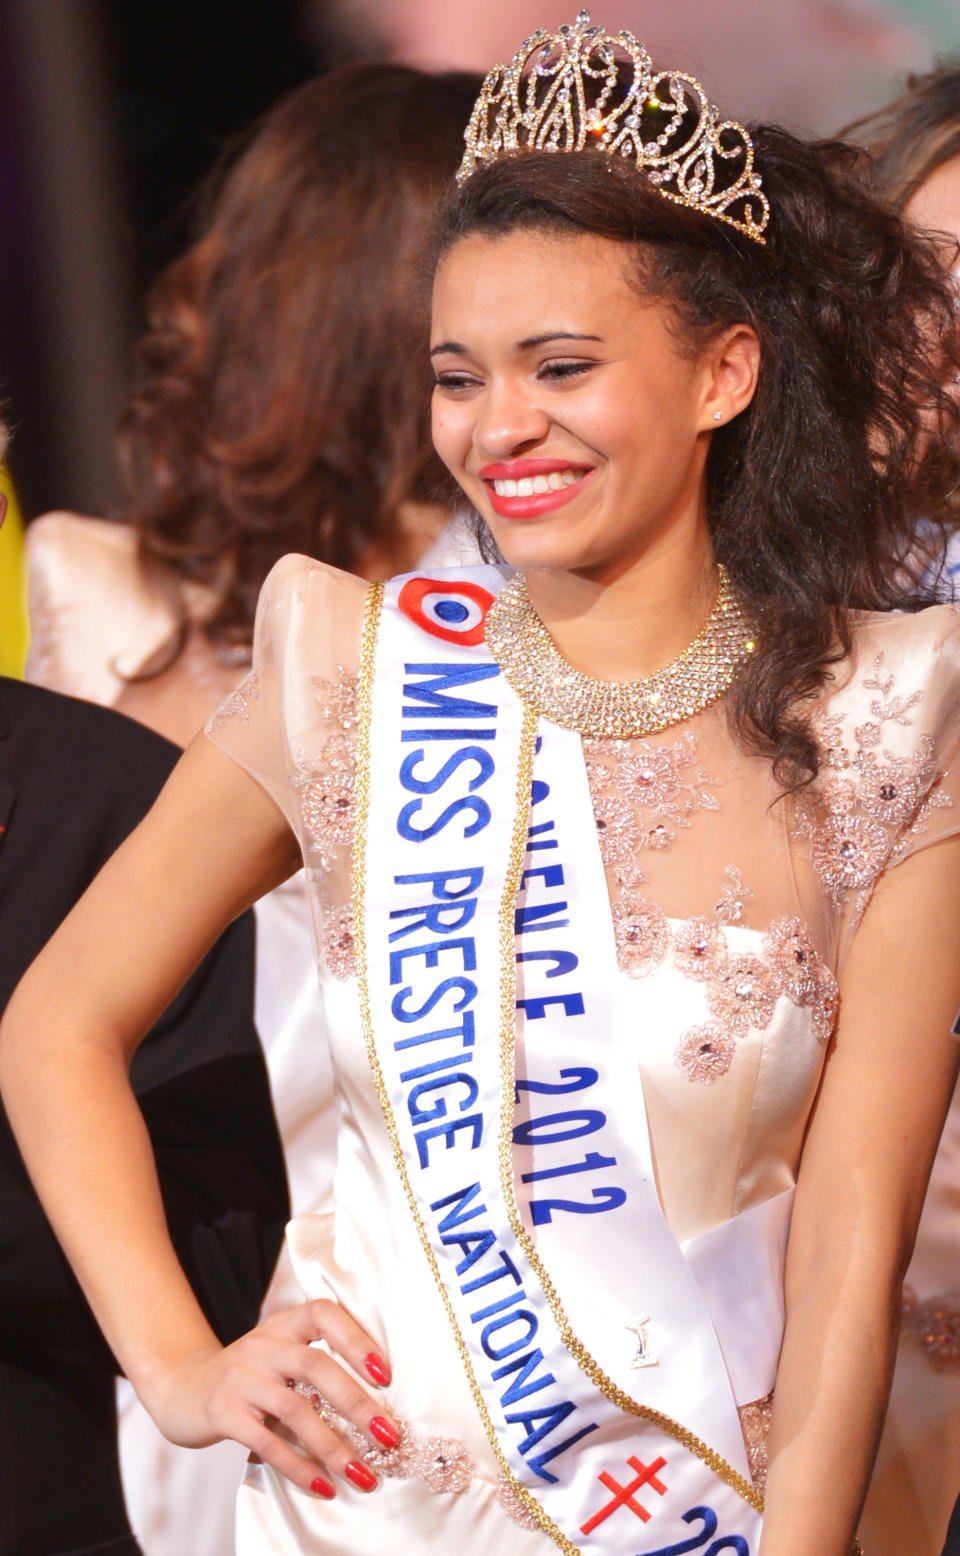 Miss Prestige National 2013